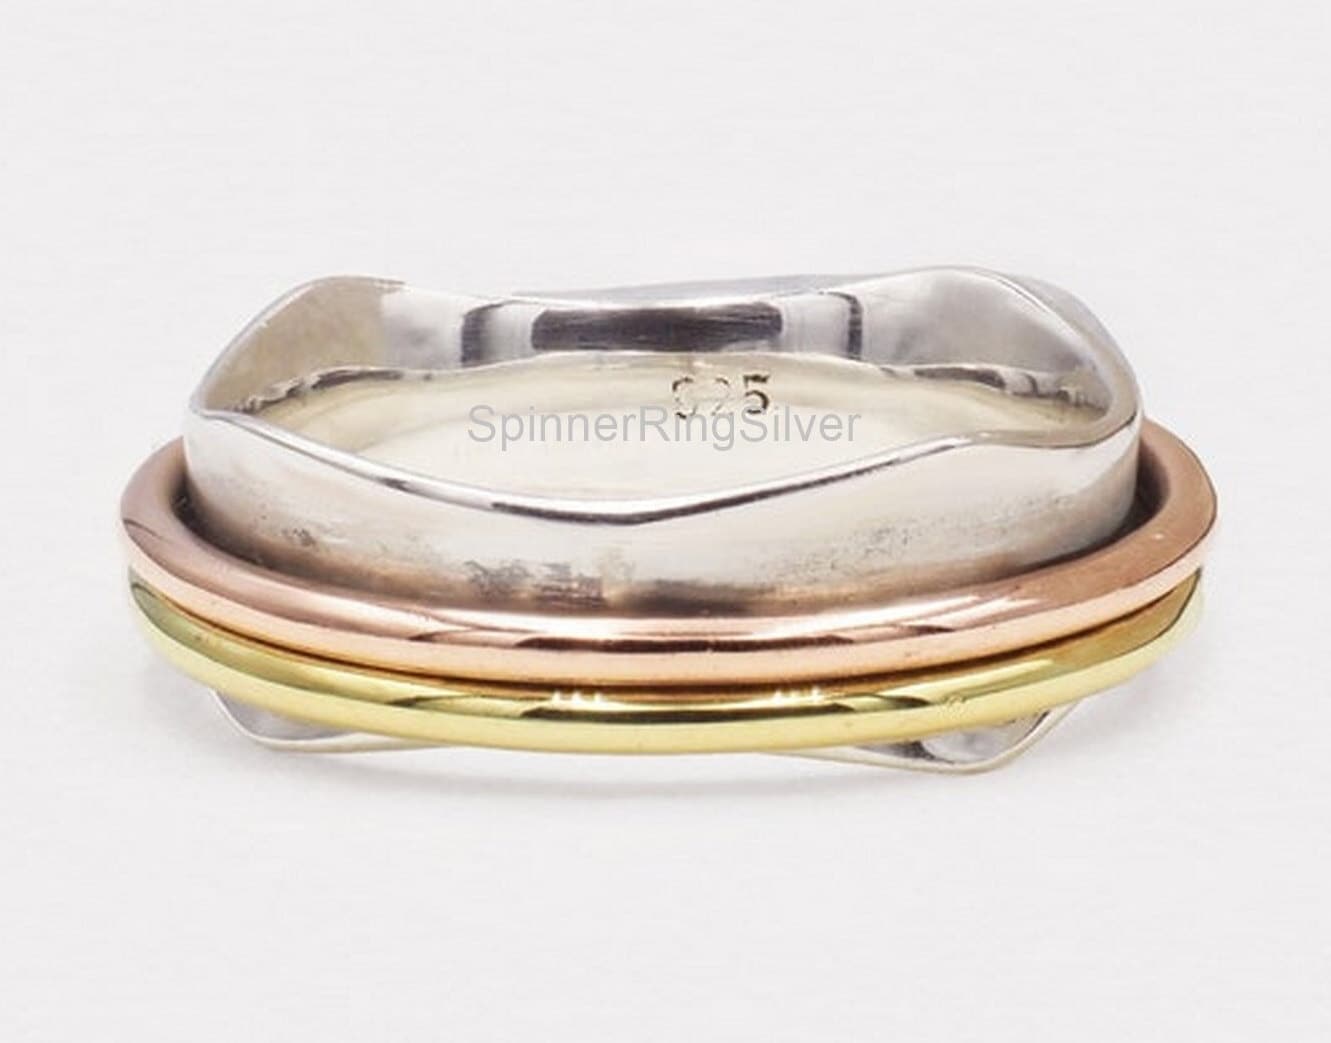 Massiver Silber Spinner Ring, 925 Sterling Daumen Frauen Boho Meditation Handgemachter Schmuck Geschenk, Sk167 von SpinnerRingSilver